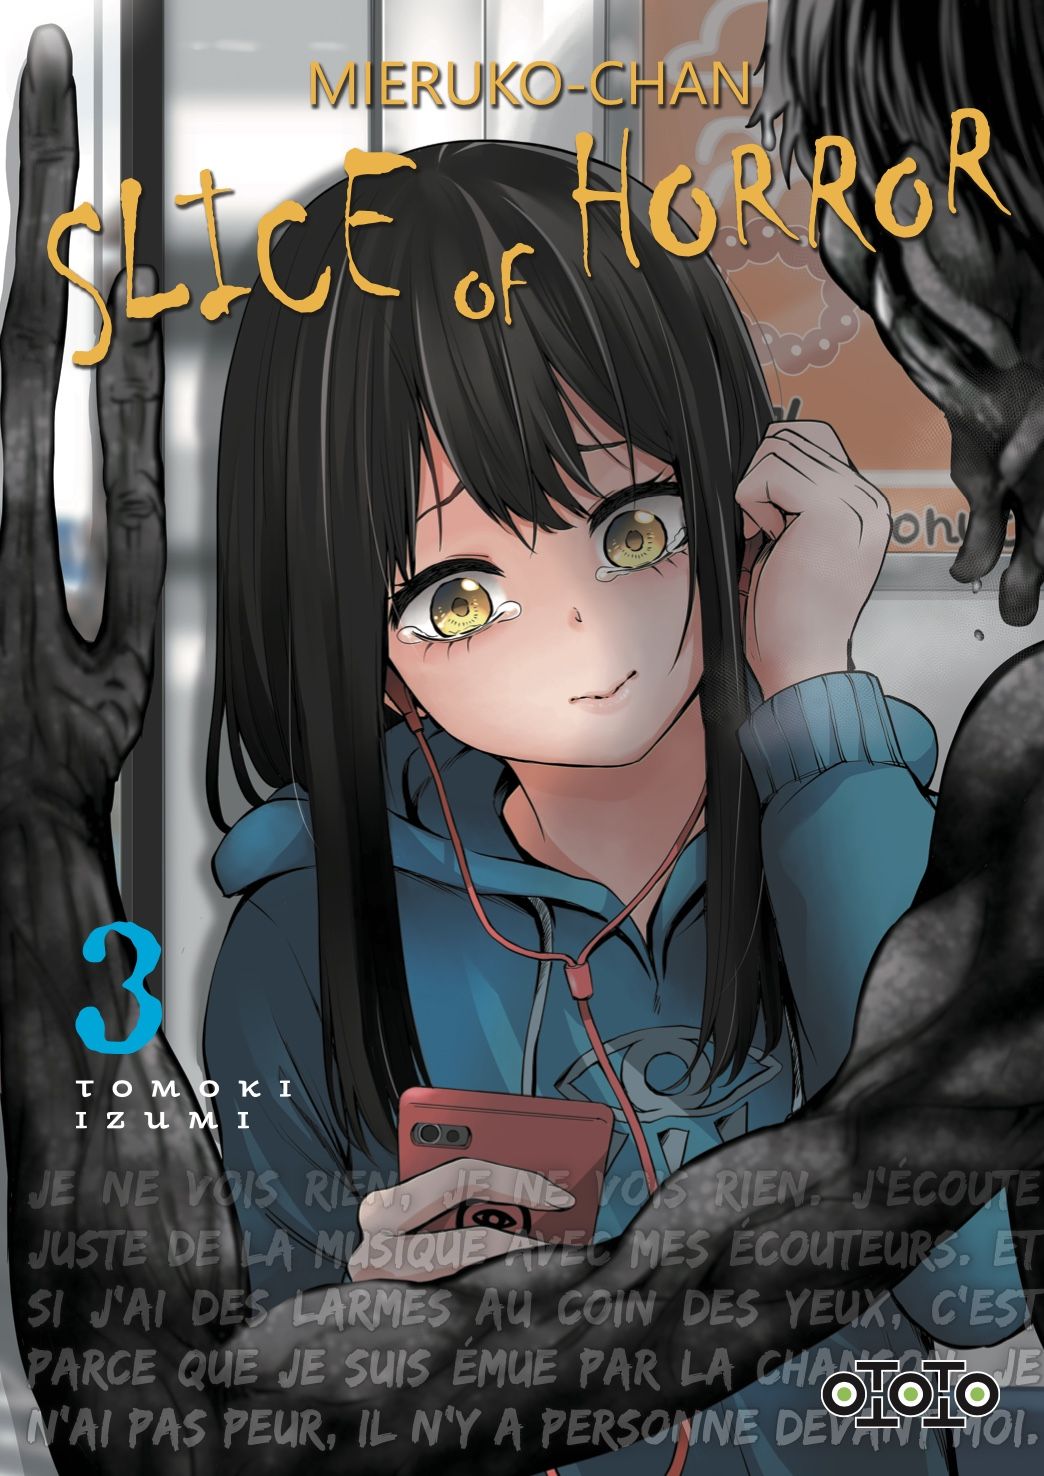 Mieruko-Chan - Slice Of Horror Vol.3